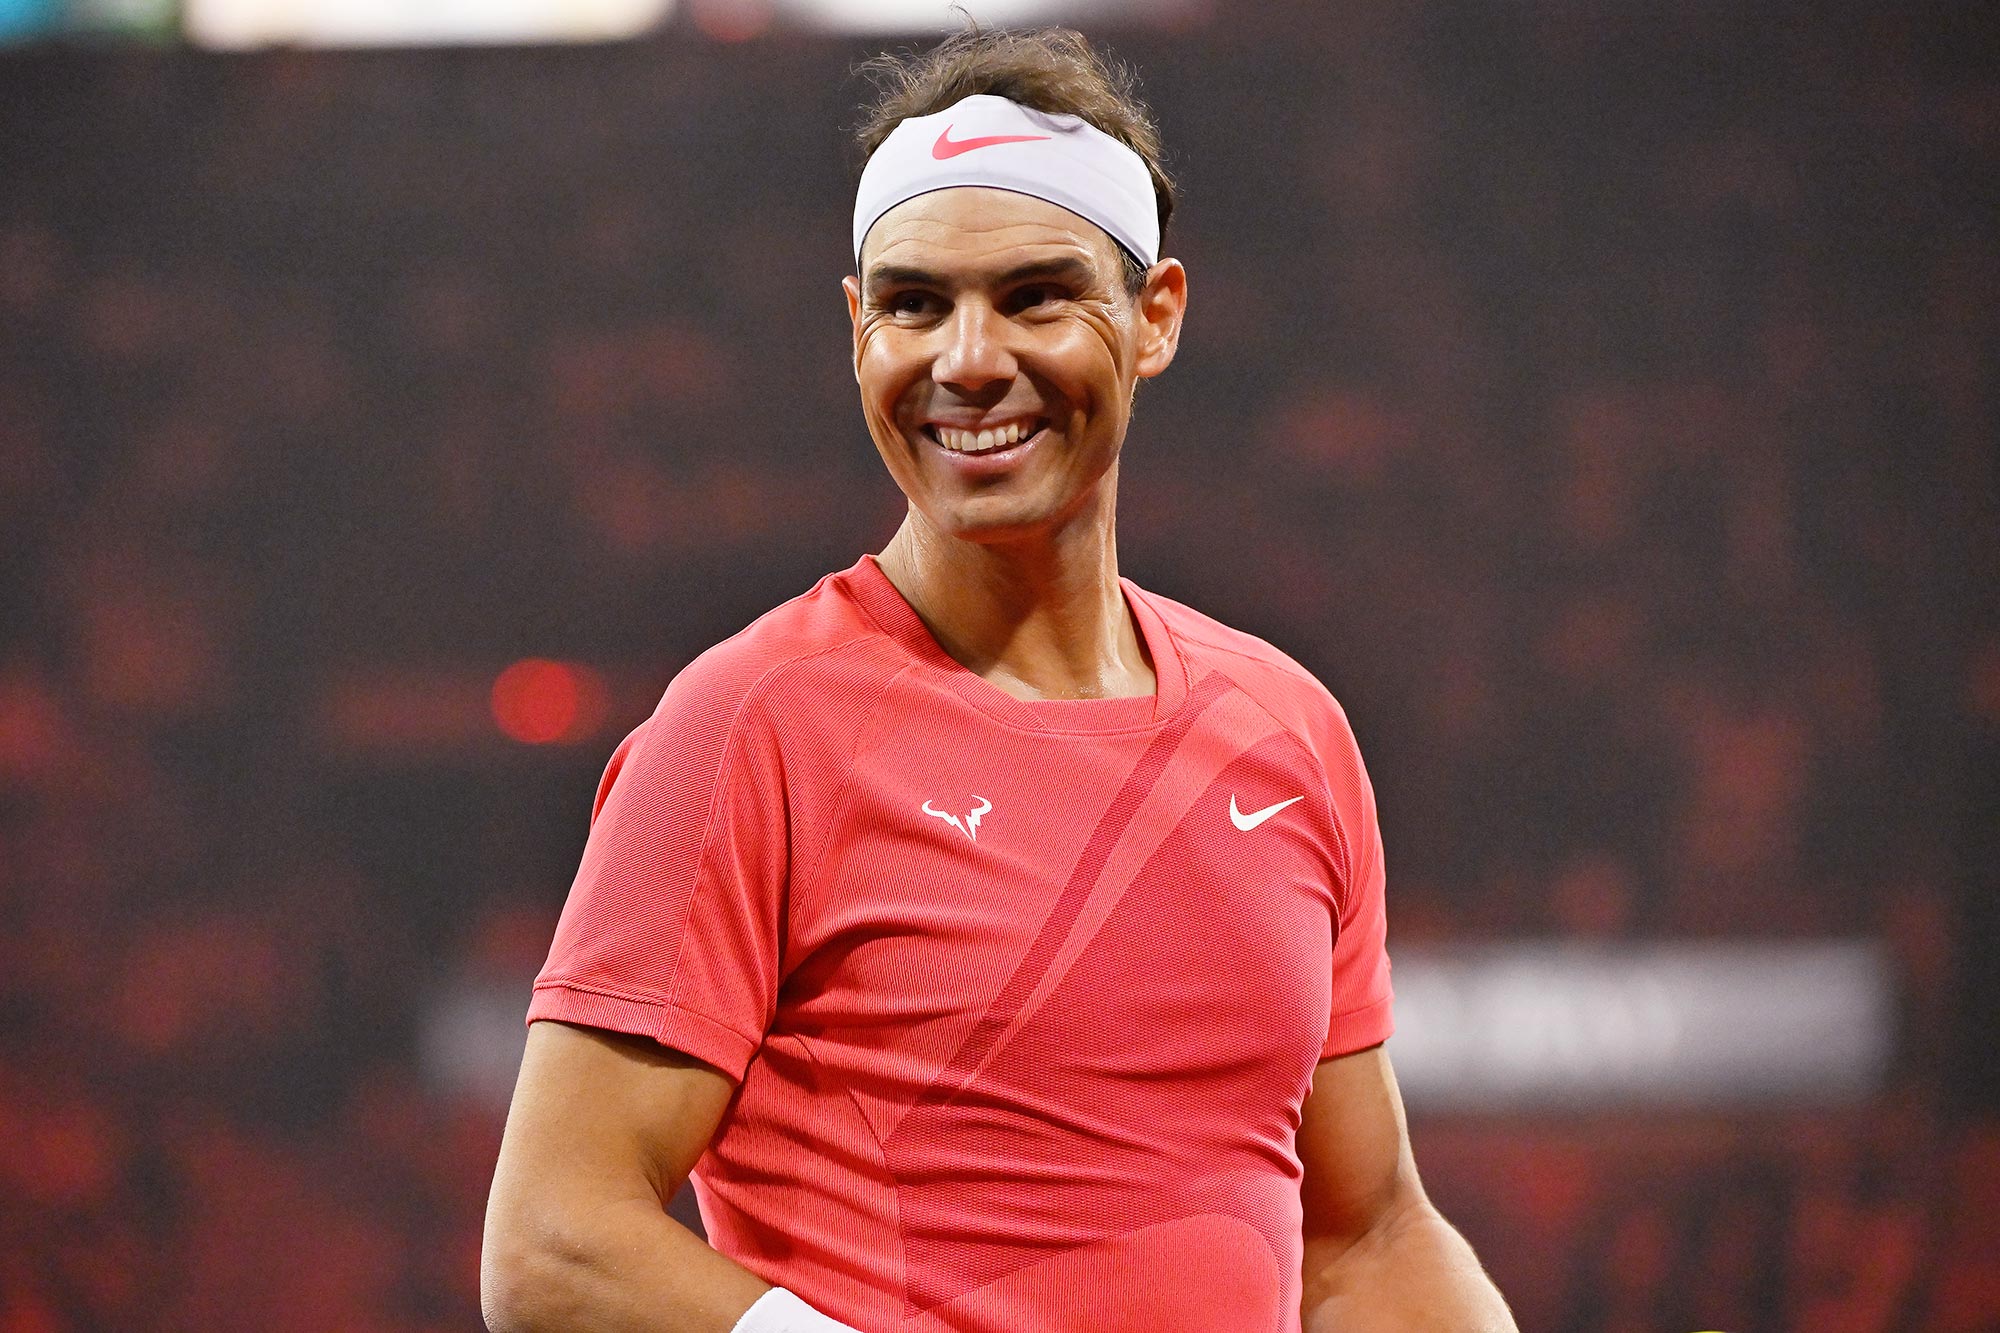 Rafael Nadal Reveals Fatherhood Has Been an 'Unexpected' Adventure